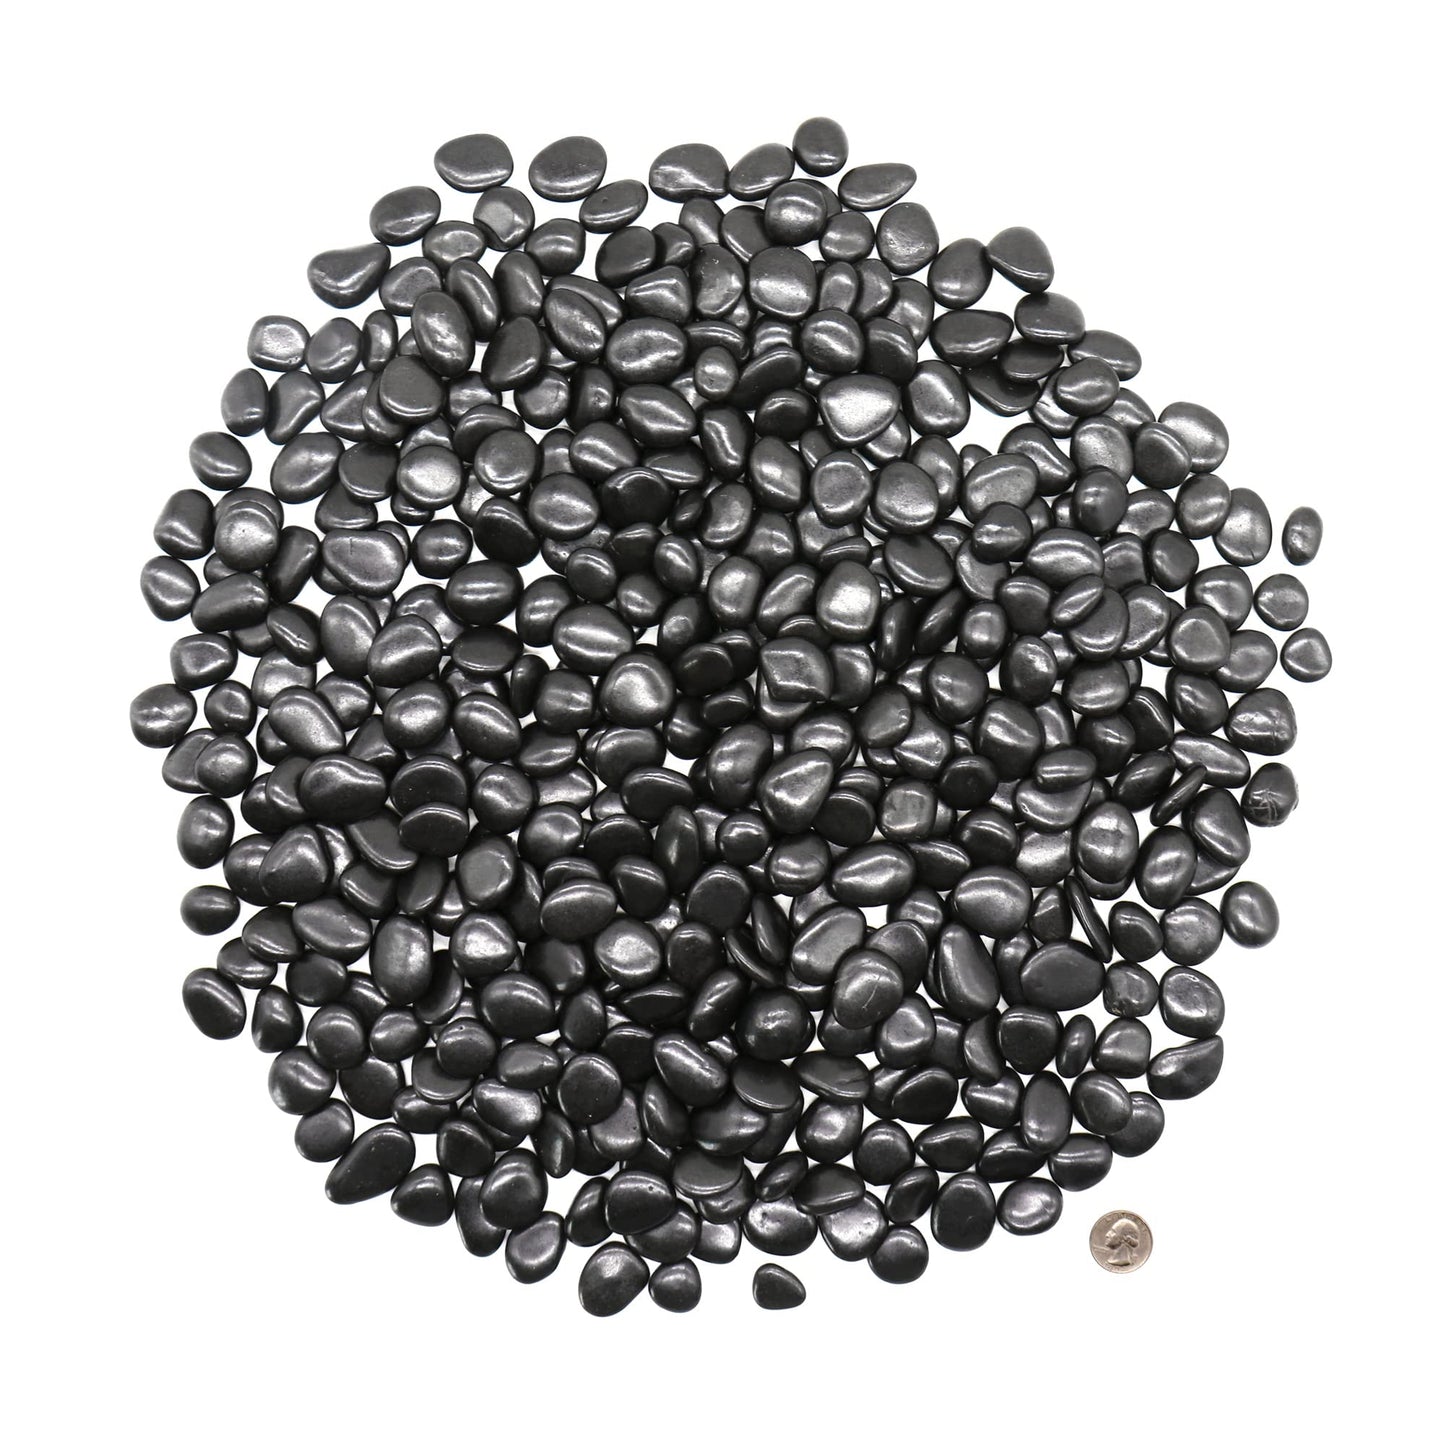 Premium Pebbles Black Rocks for Plants. Black Decorative Polished Pebbles. 1/2 to 1 Inch – 2 lbs. for Plants, Garden, Vase fillers, Succulents, pots (SM (0.5 to 1 Inch), Black -Polished, 2)